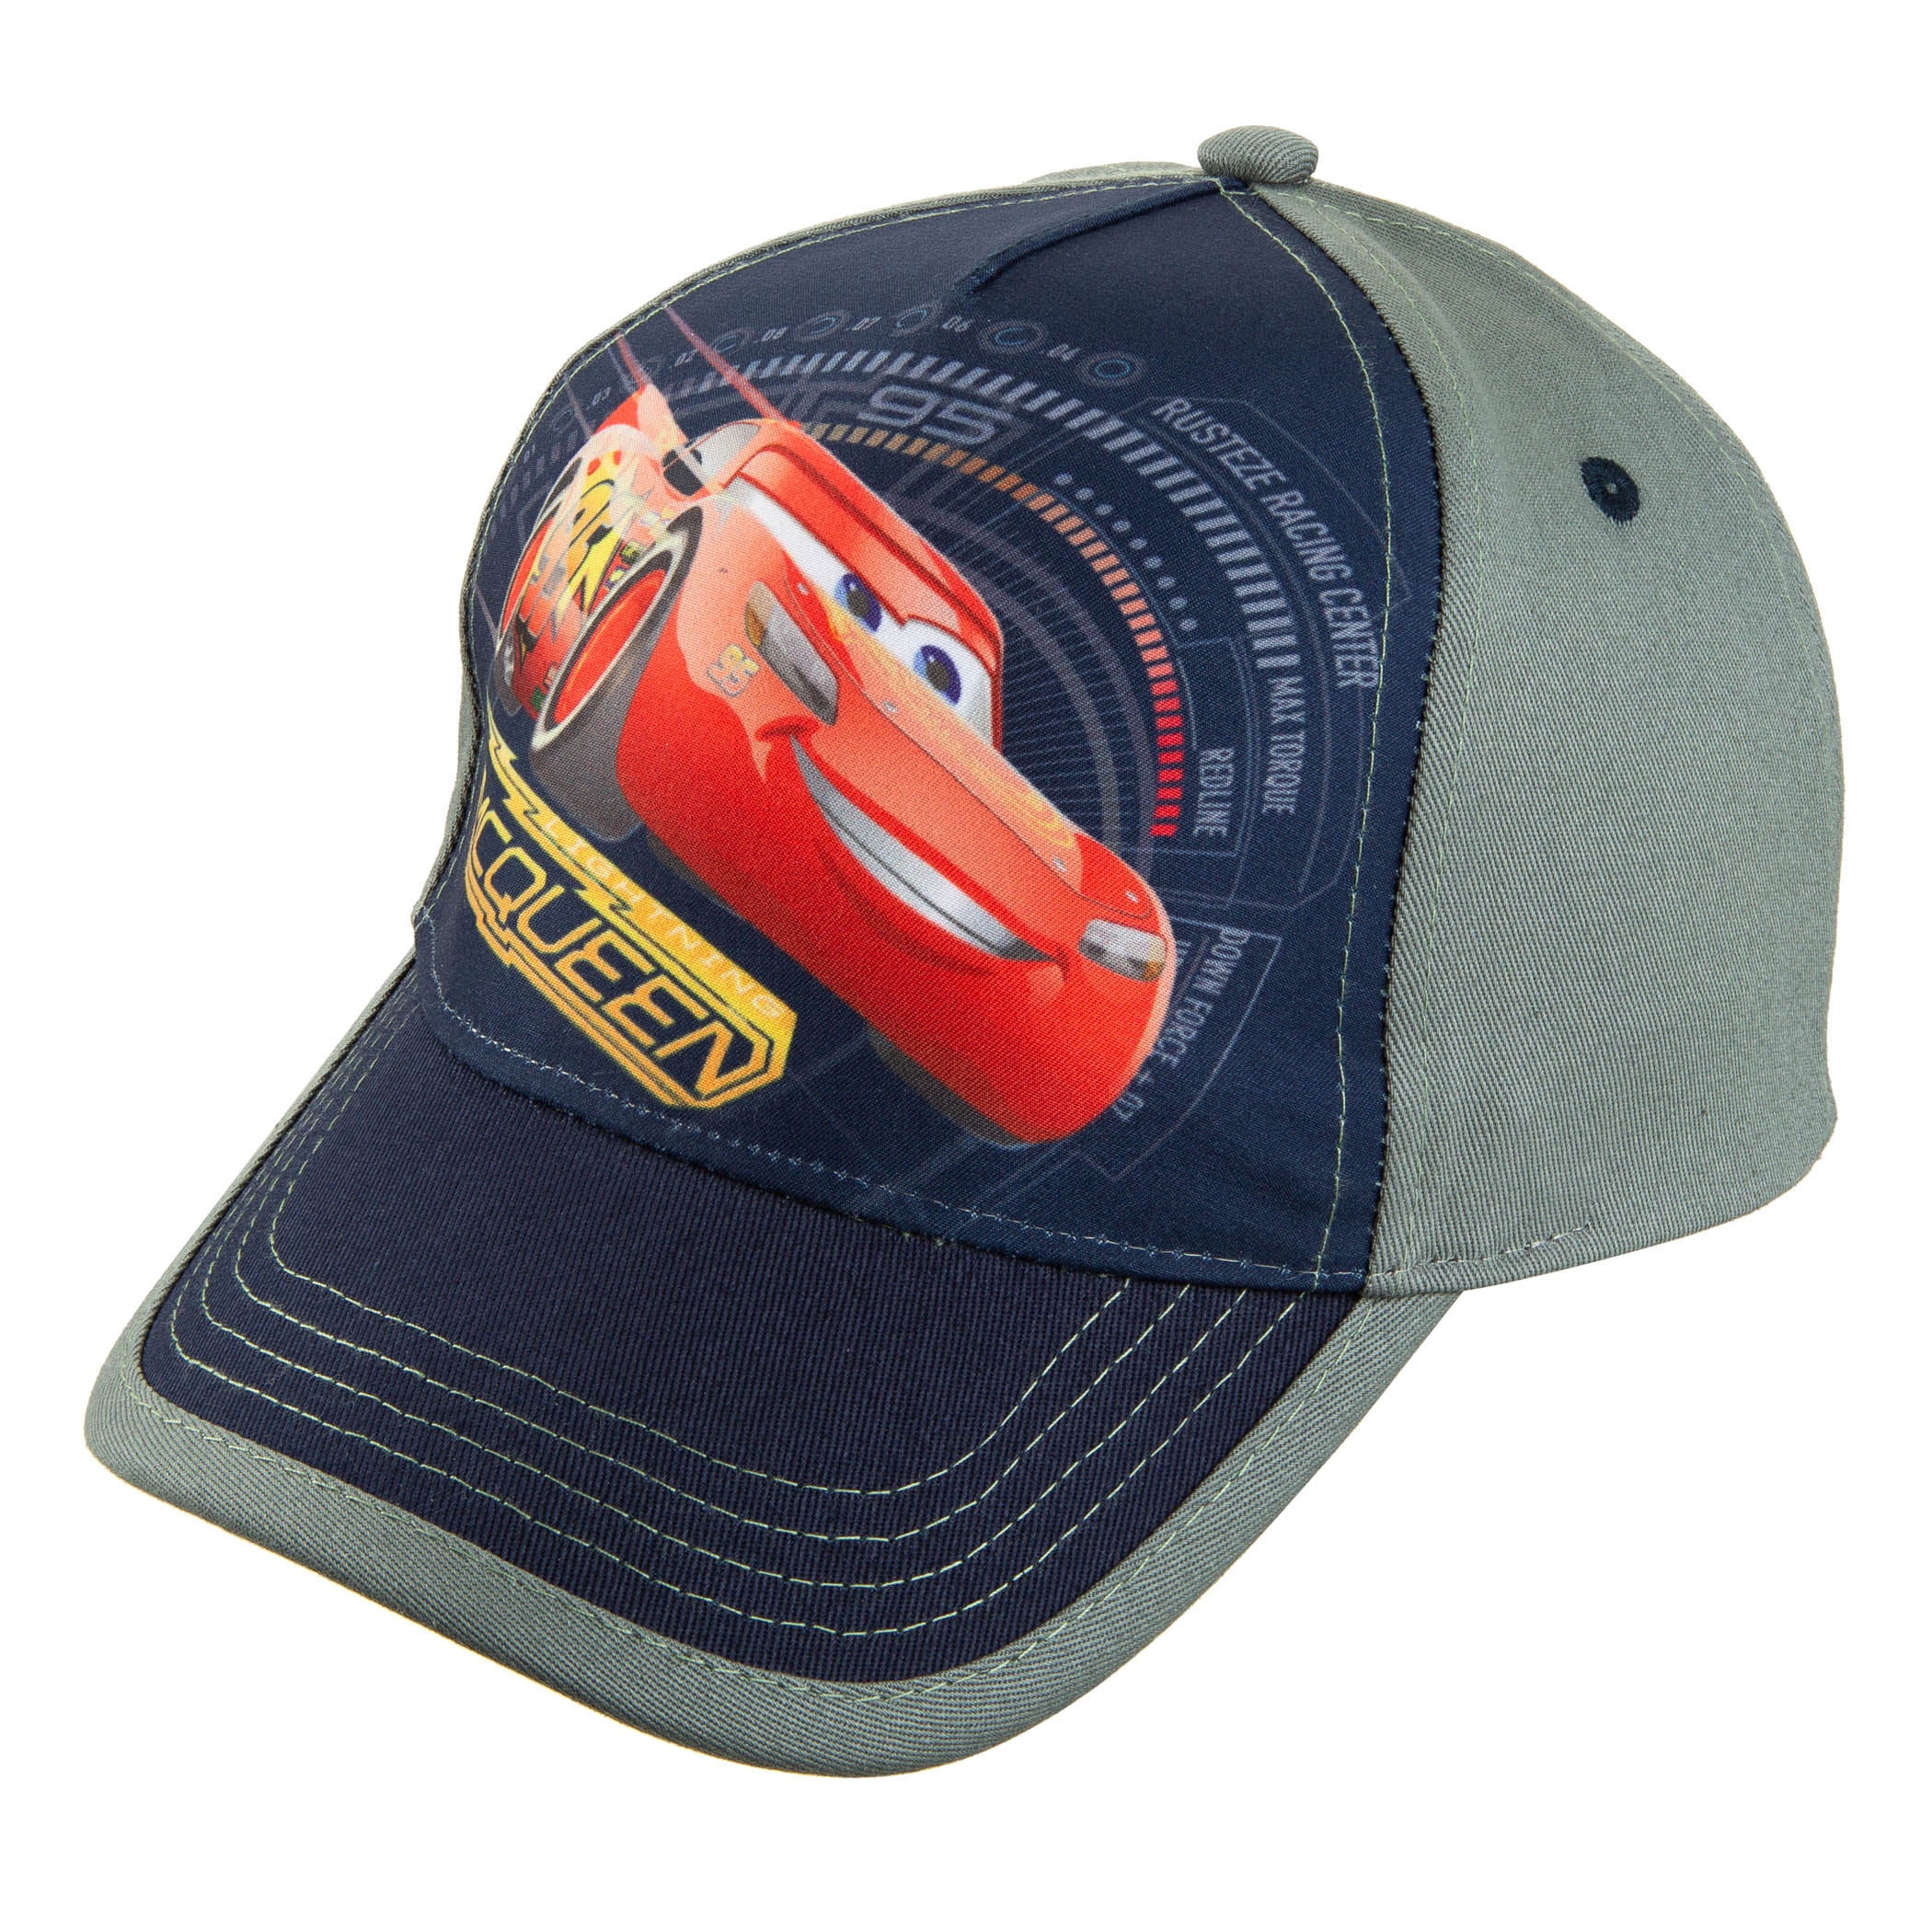 Disney Pixar Cars snap back ball cap hat Toddler